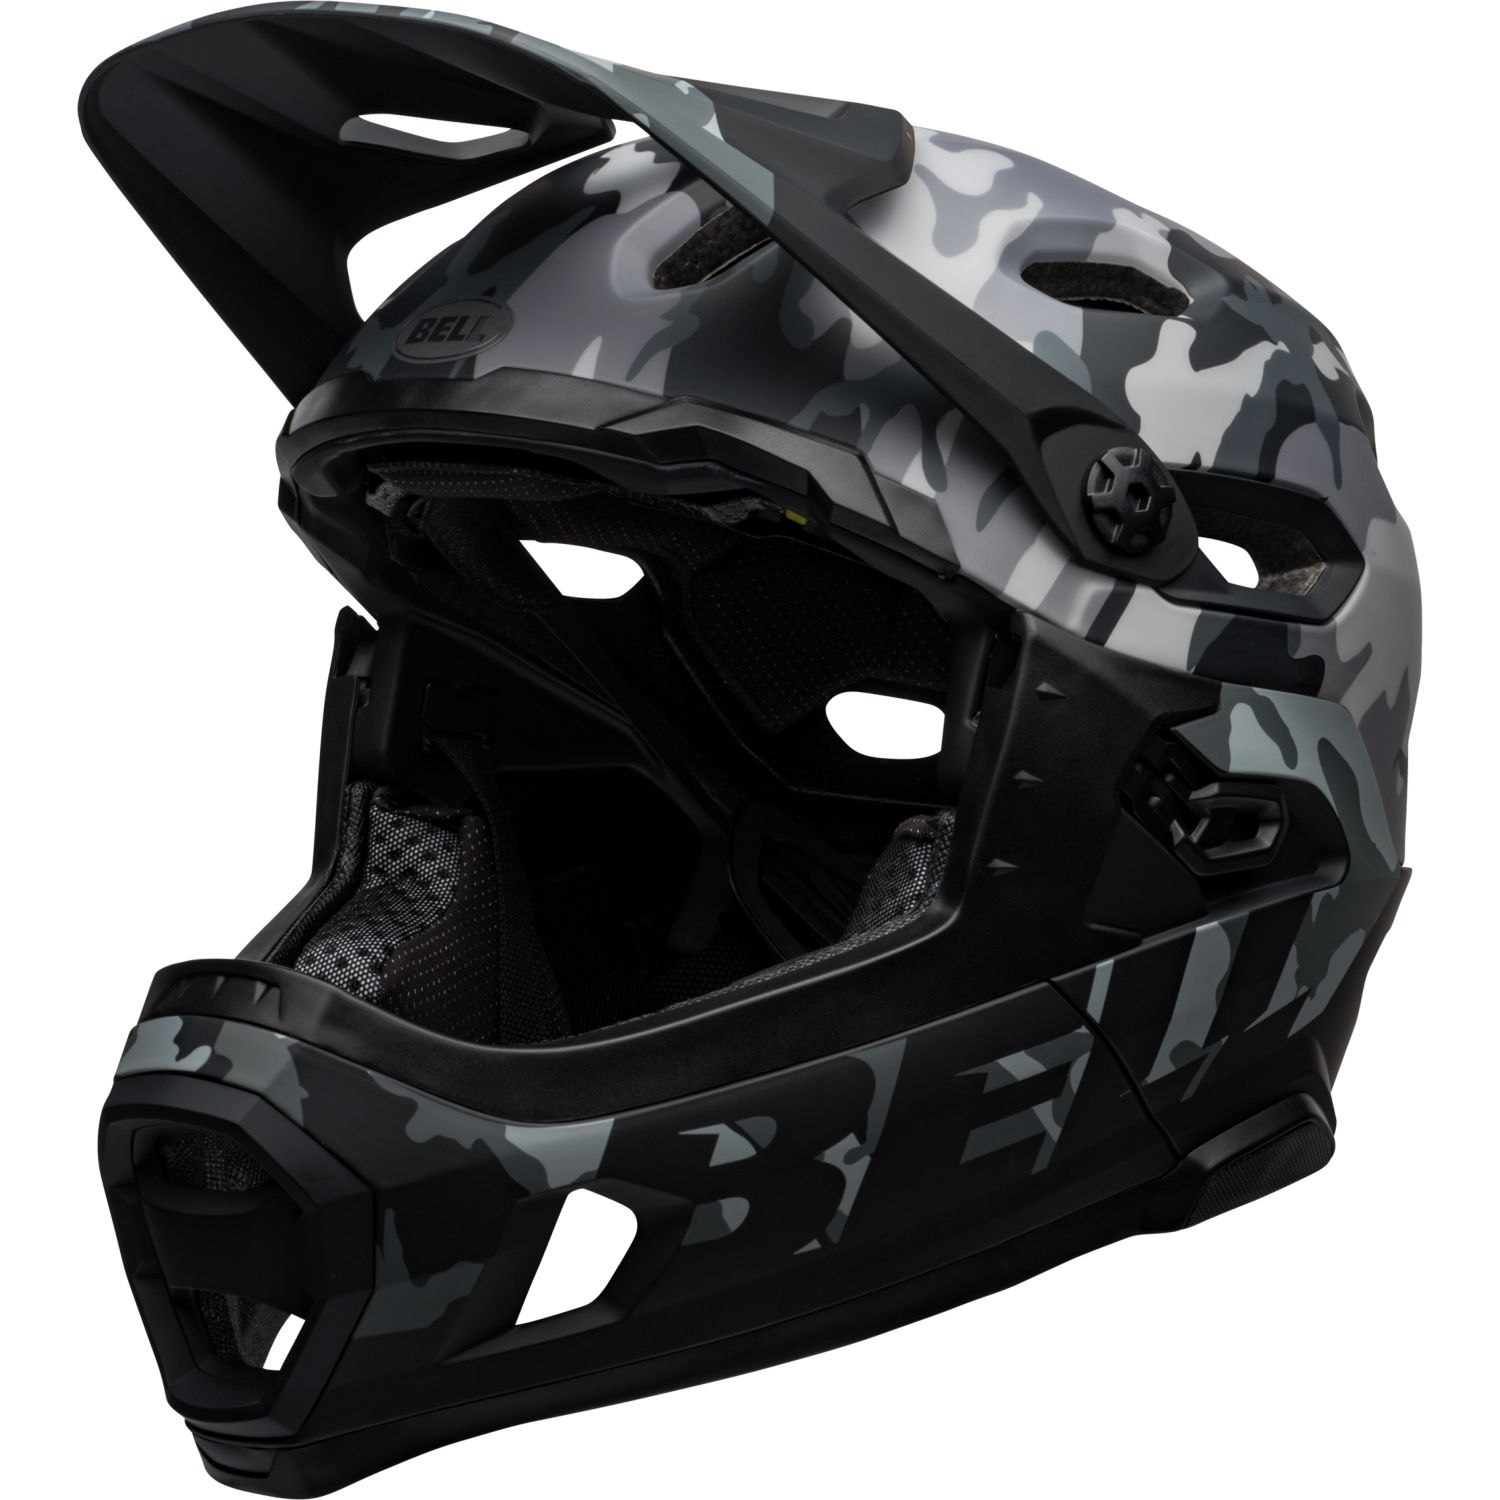 Productfoto van Bell Super DH Spherical Helm - matte/gloss black camo